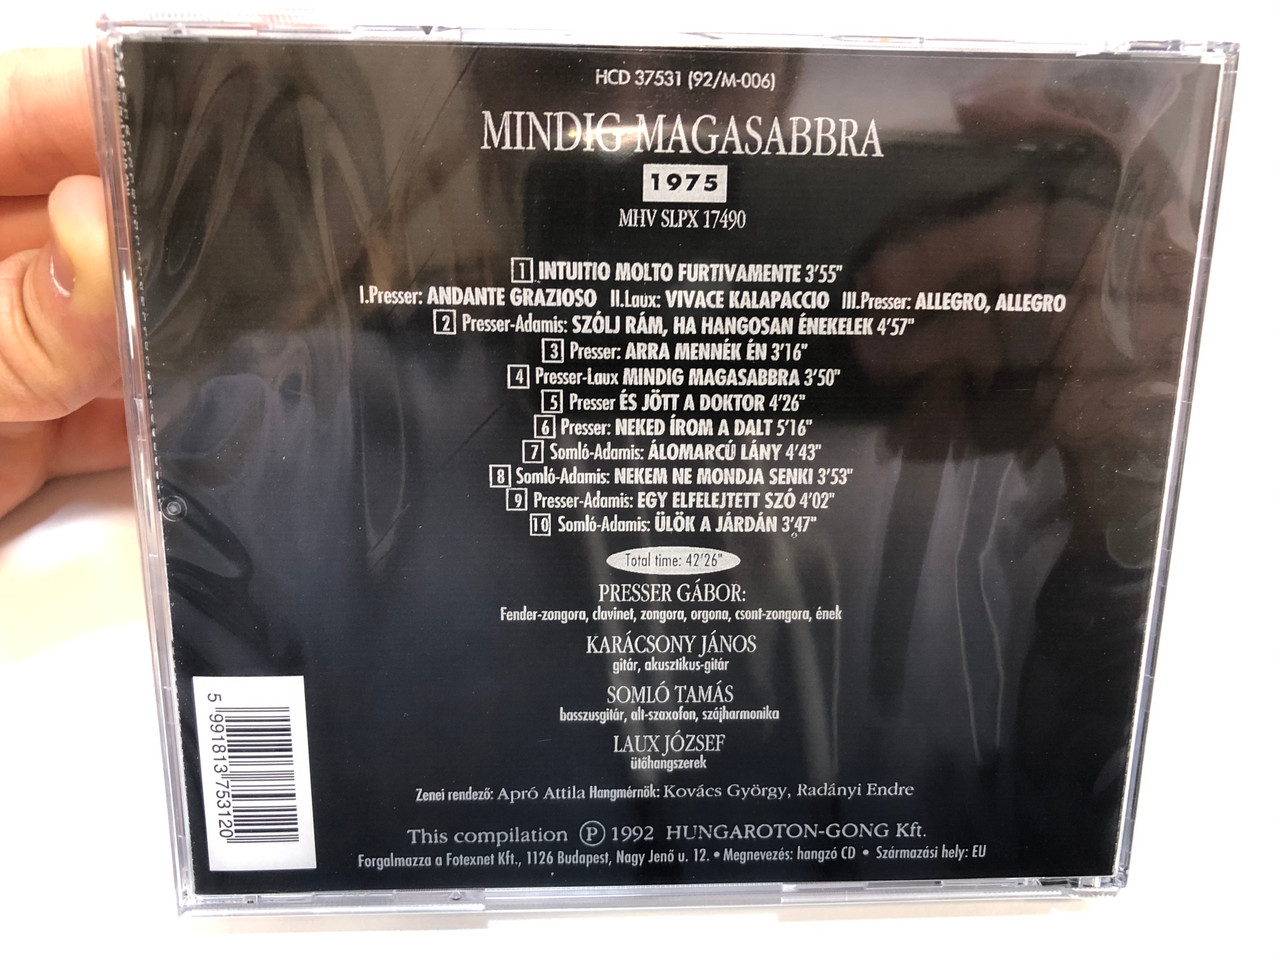 Mindig Magasabbra - Locomotiv GT / Hungaroton-Gong Audio CD 1992 / HCD  37531 (92/M-006) - bibleinmylanguage